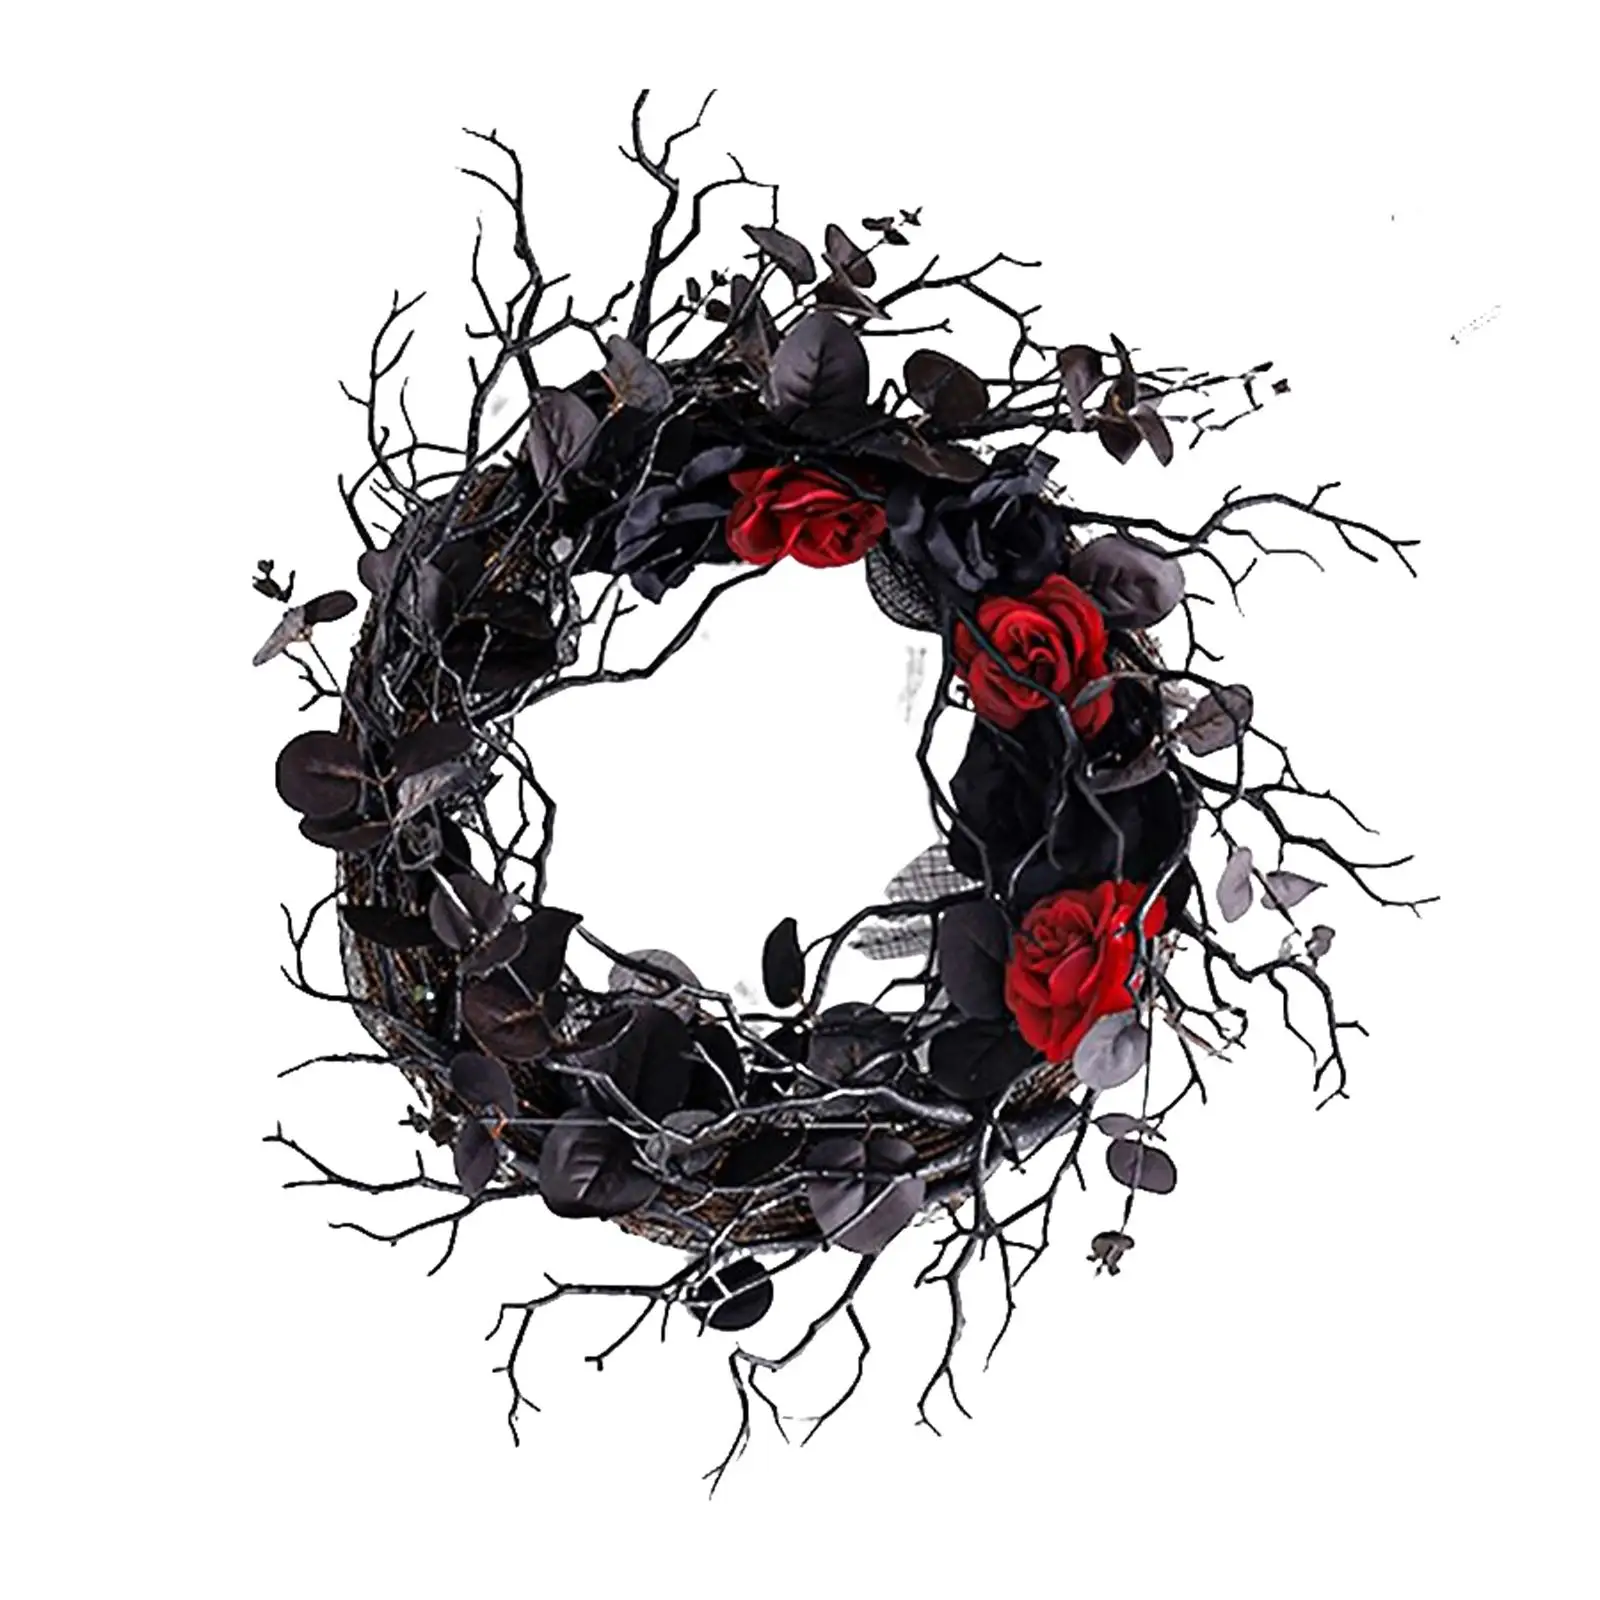 Artificial Halloween Wreath Black Red Festive Atmosphere 14inch Spooky Ornament for Party Door Decorations Indoor Outdoor